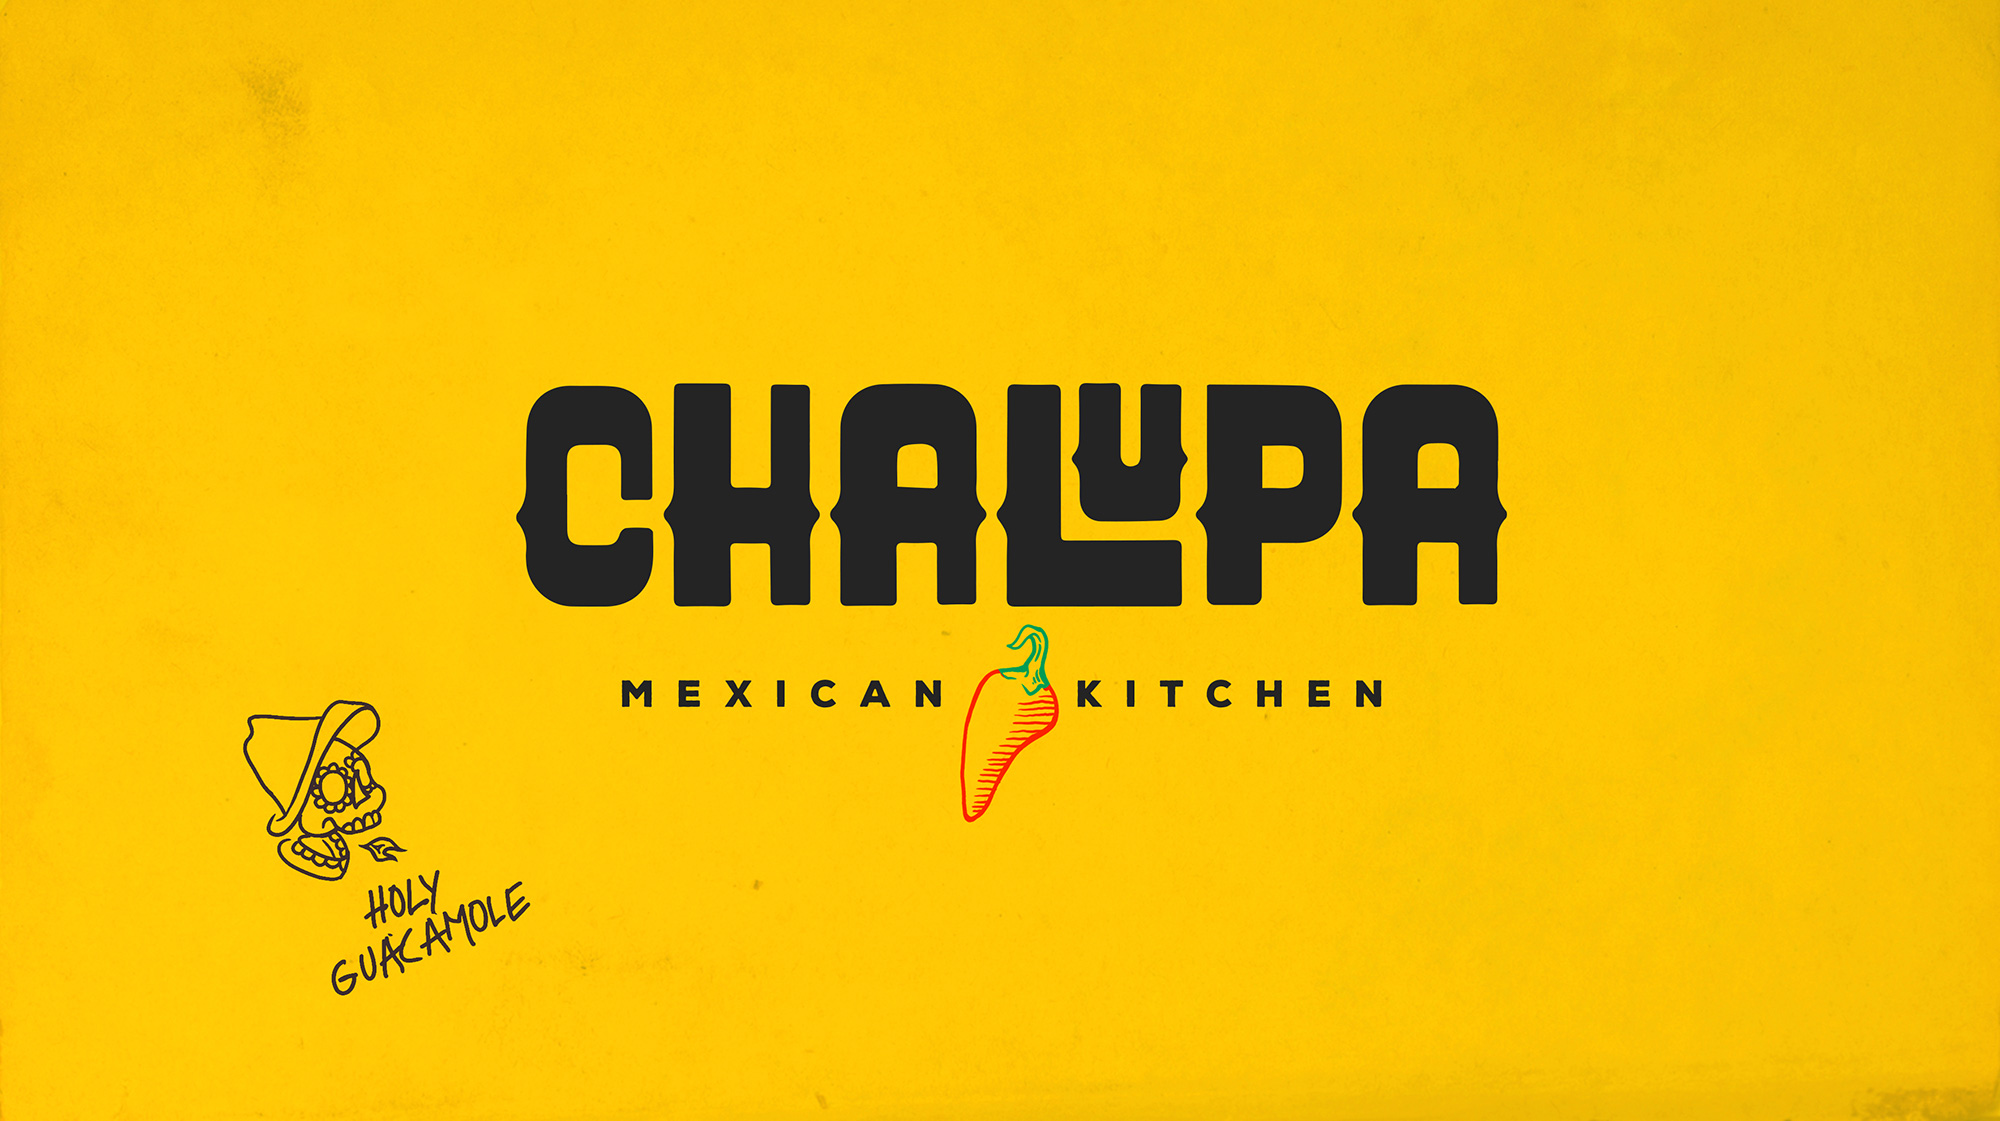 Chalupa unused logoproposal